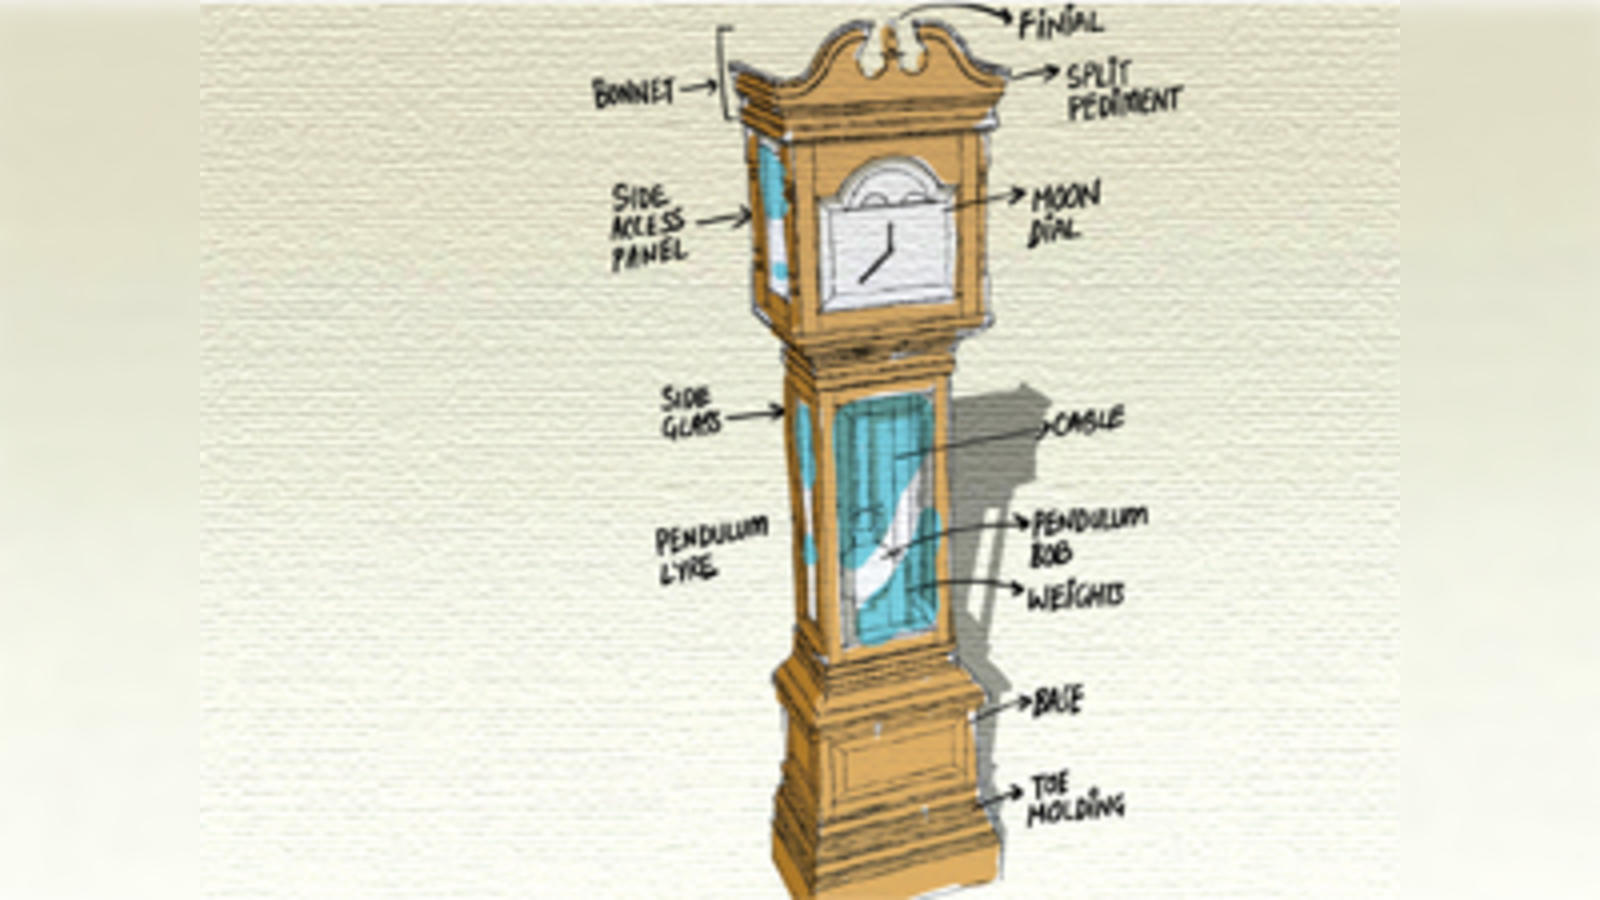 grandfather clock: mechanism of a pendulum clock - Students